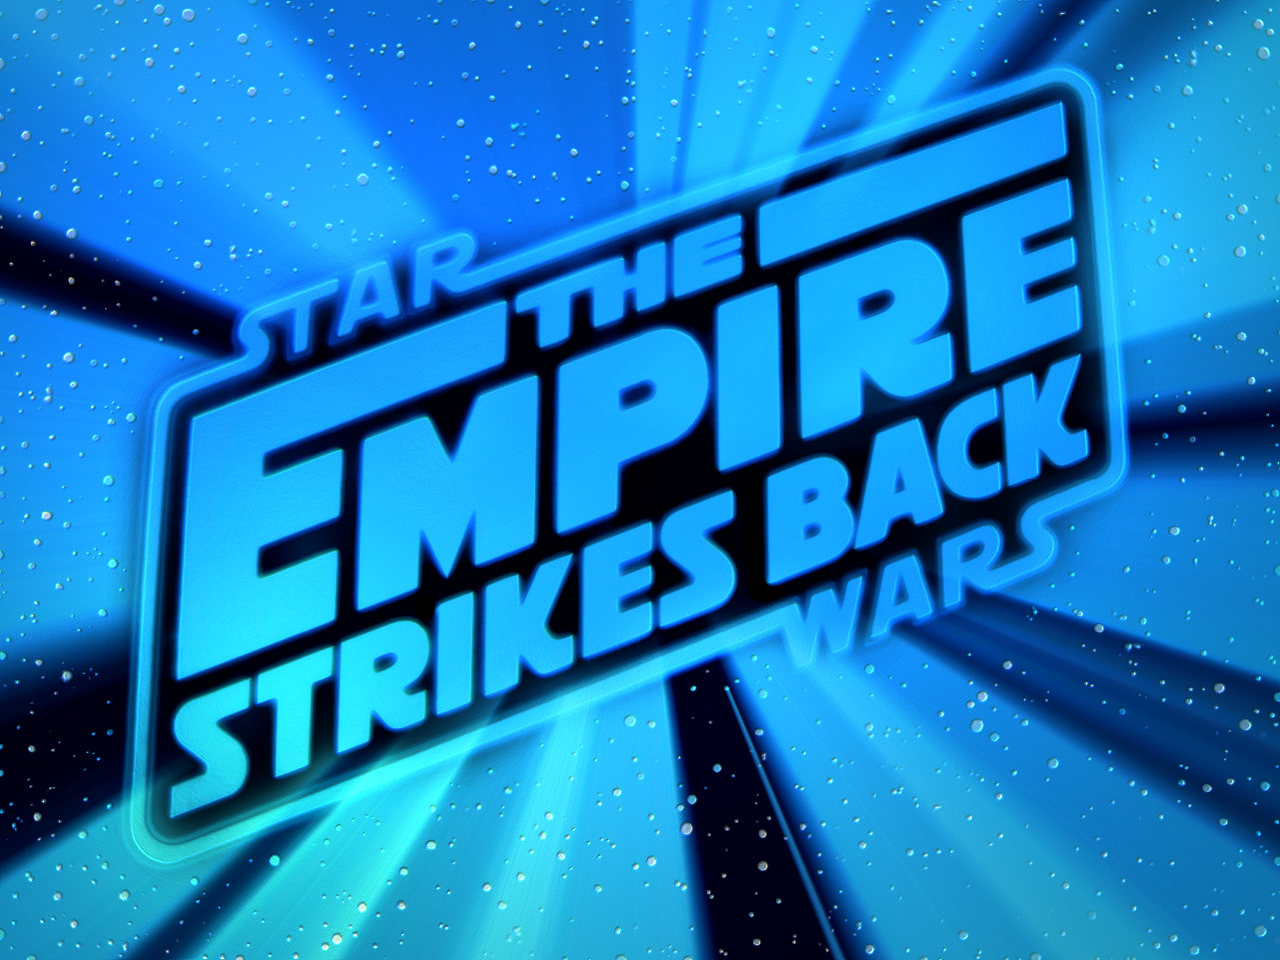 1280x960 Empire Strikes Back Logo desktop PC and Mac wallpaper